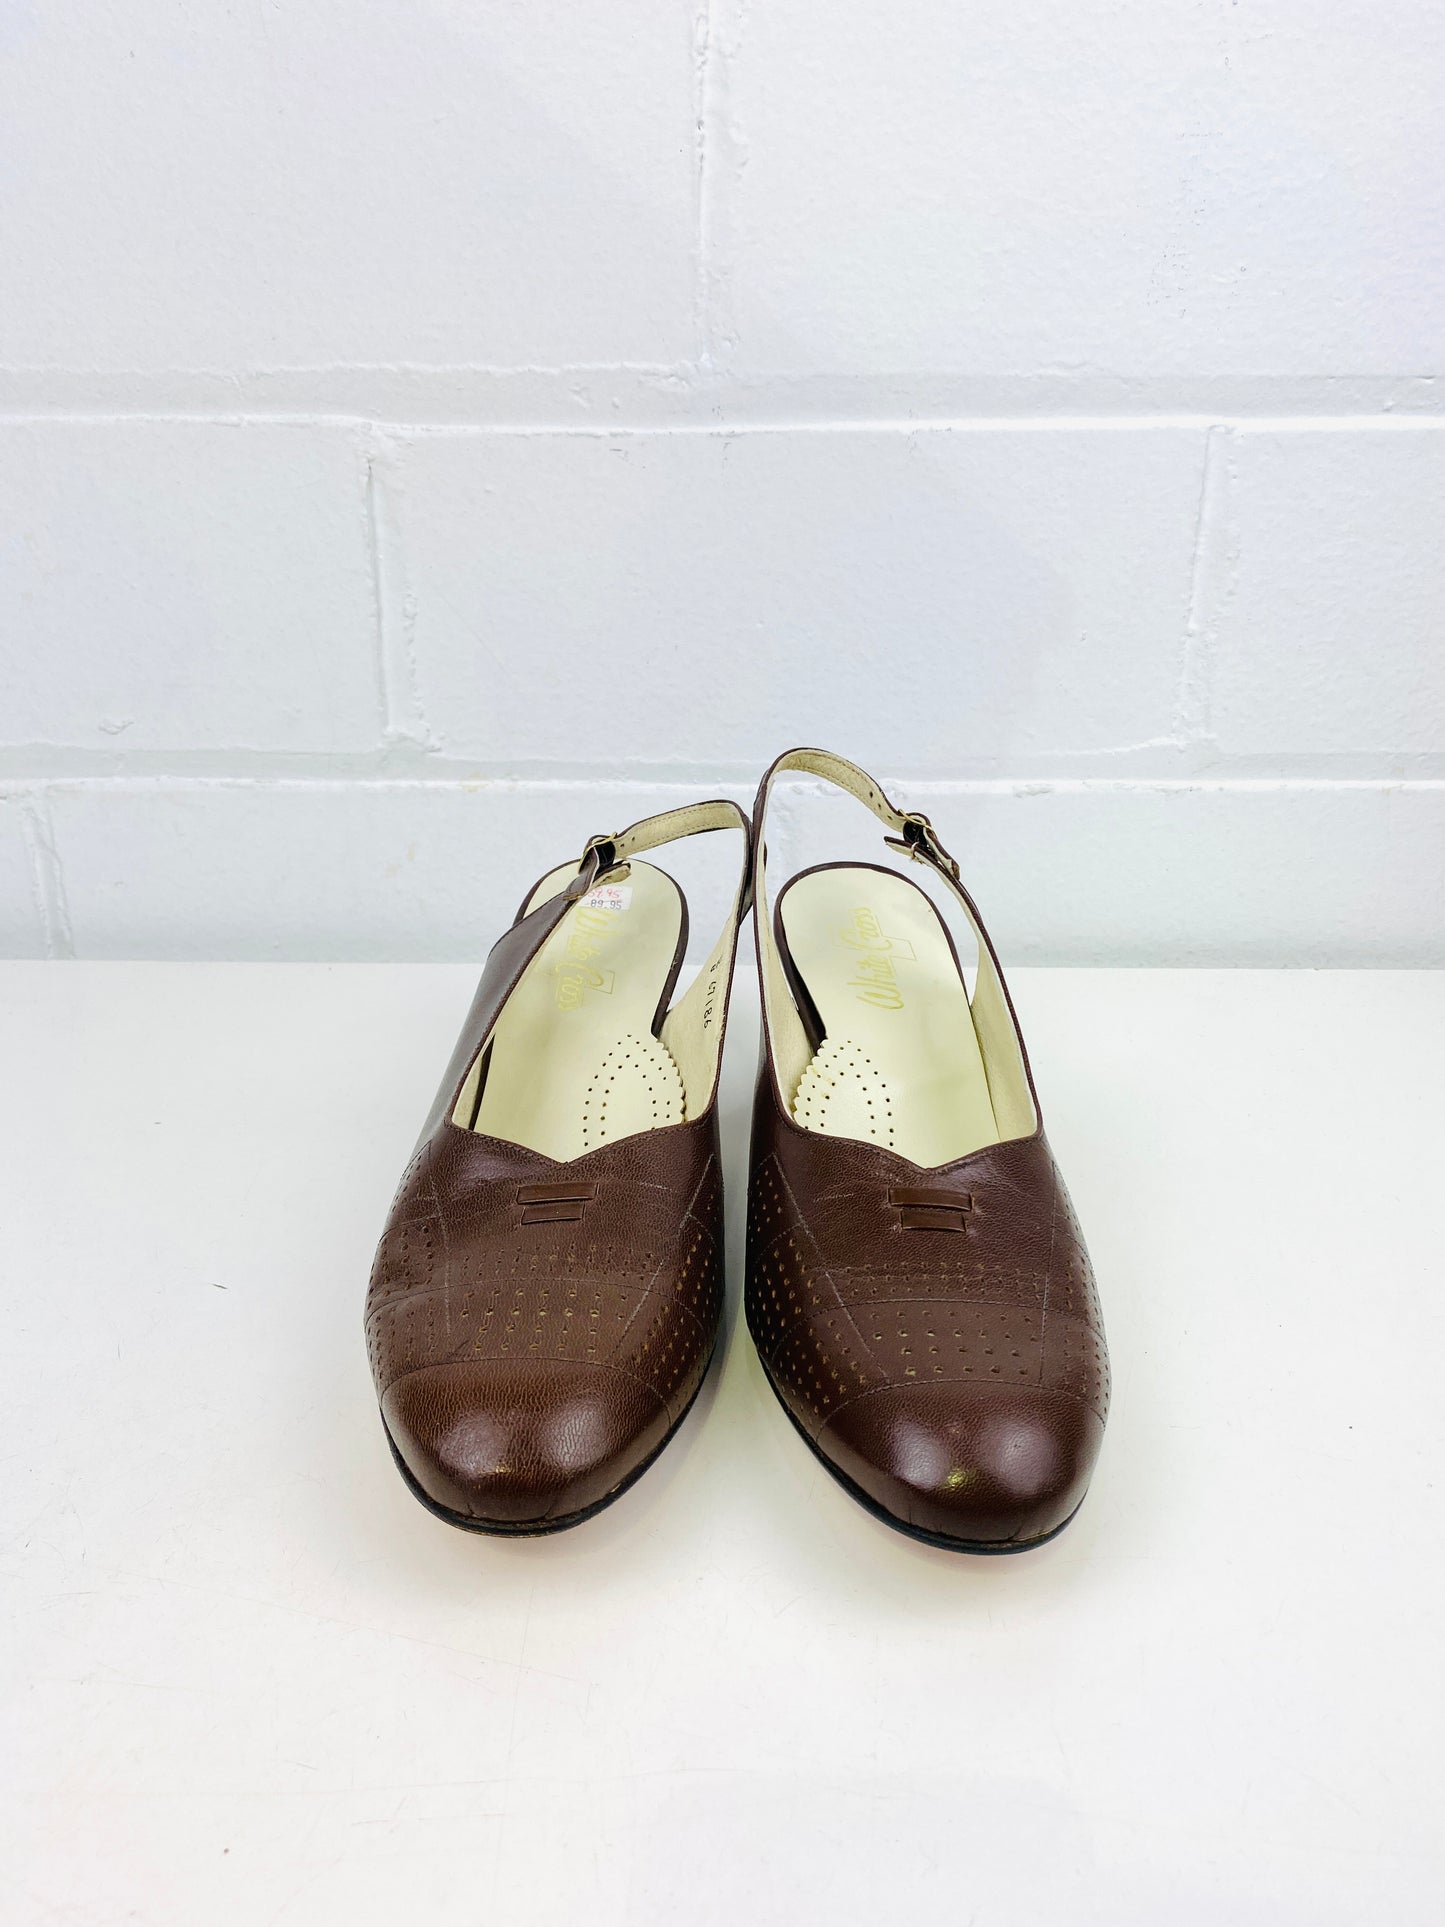 Vintage Deadstock Shoes, Women's 1980s Brown Leather Mid-Heel Sling-Back Pumps, NOS, 8577